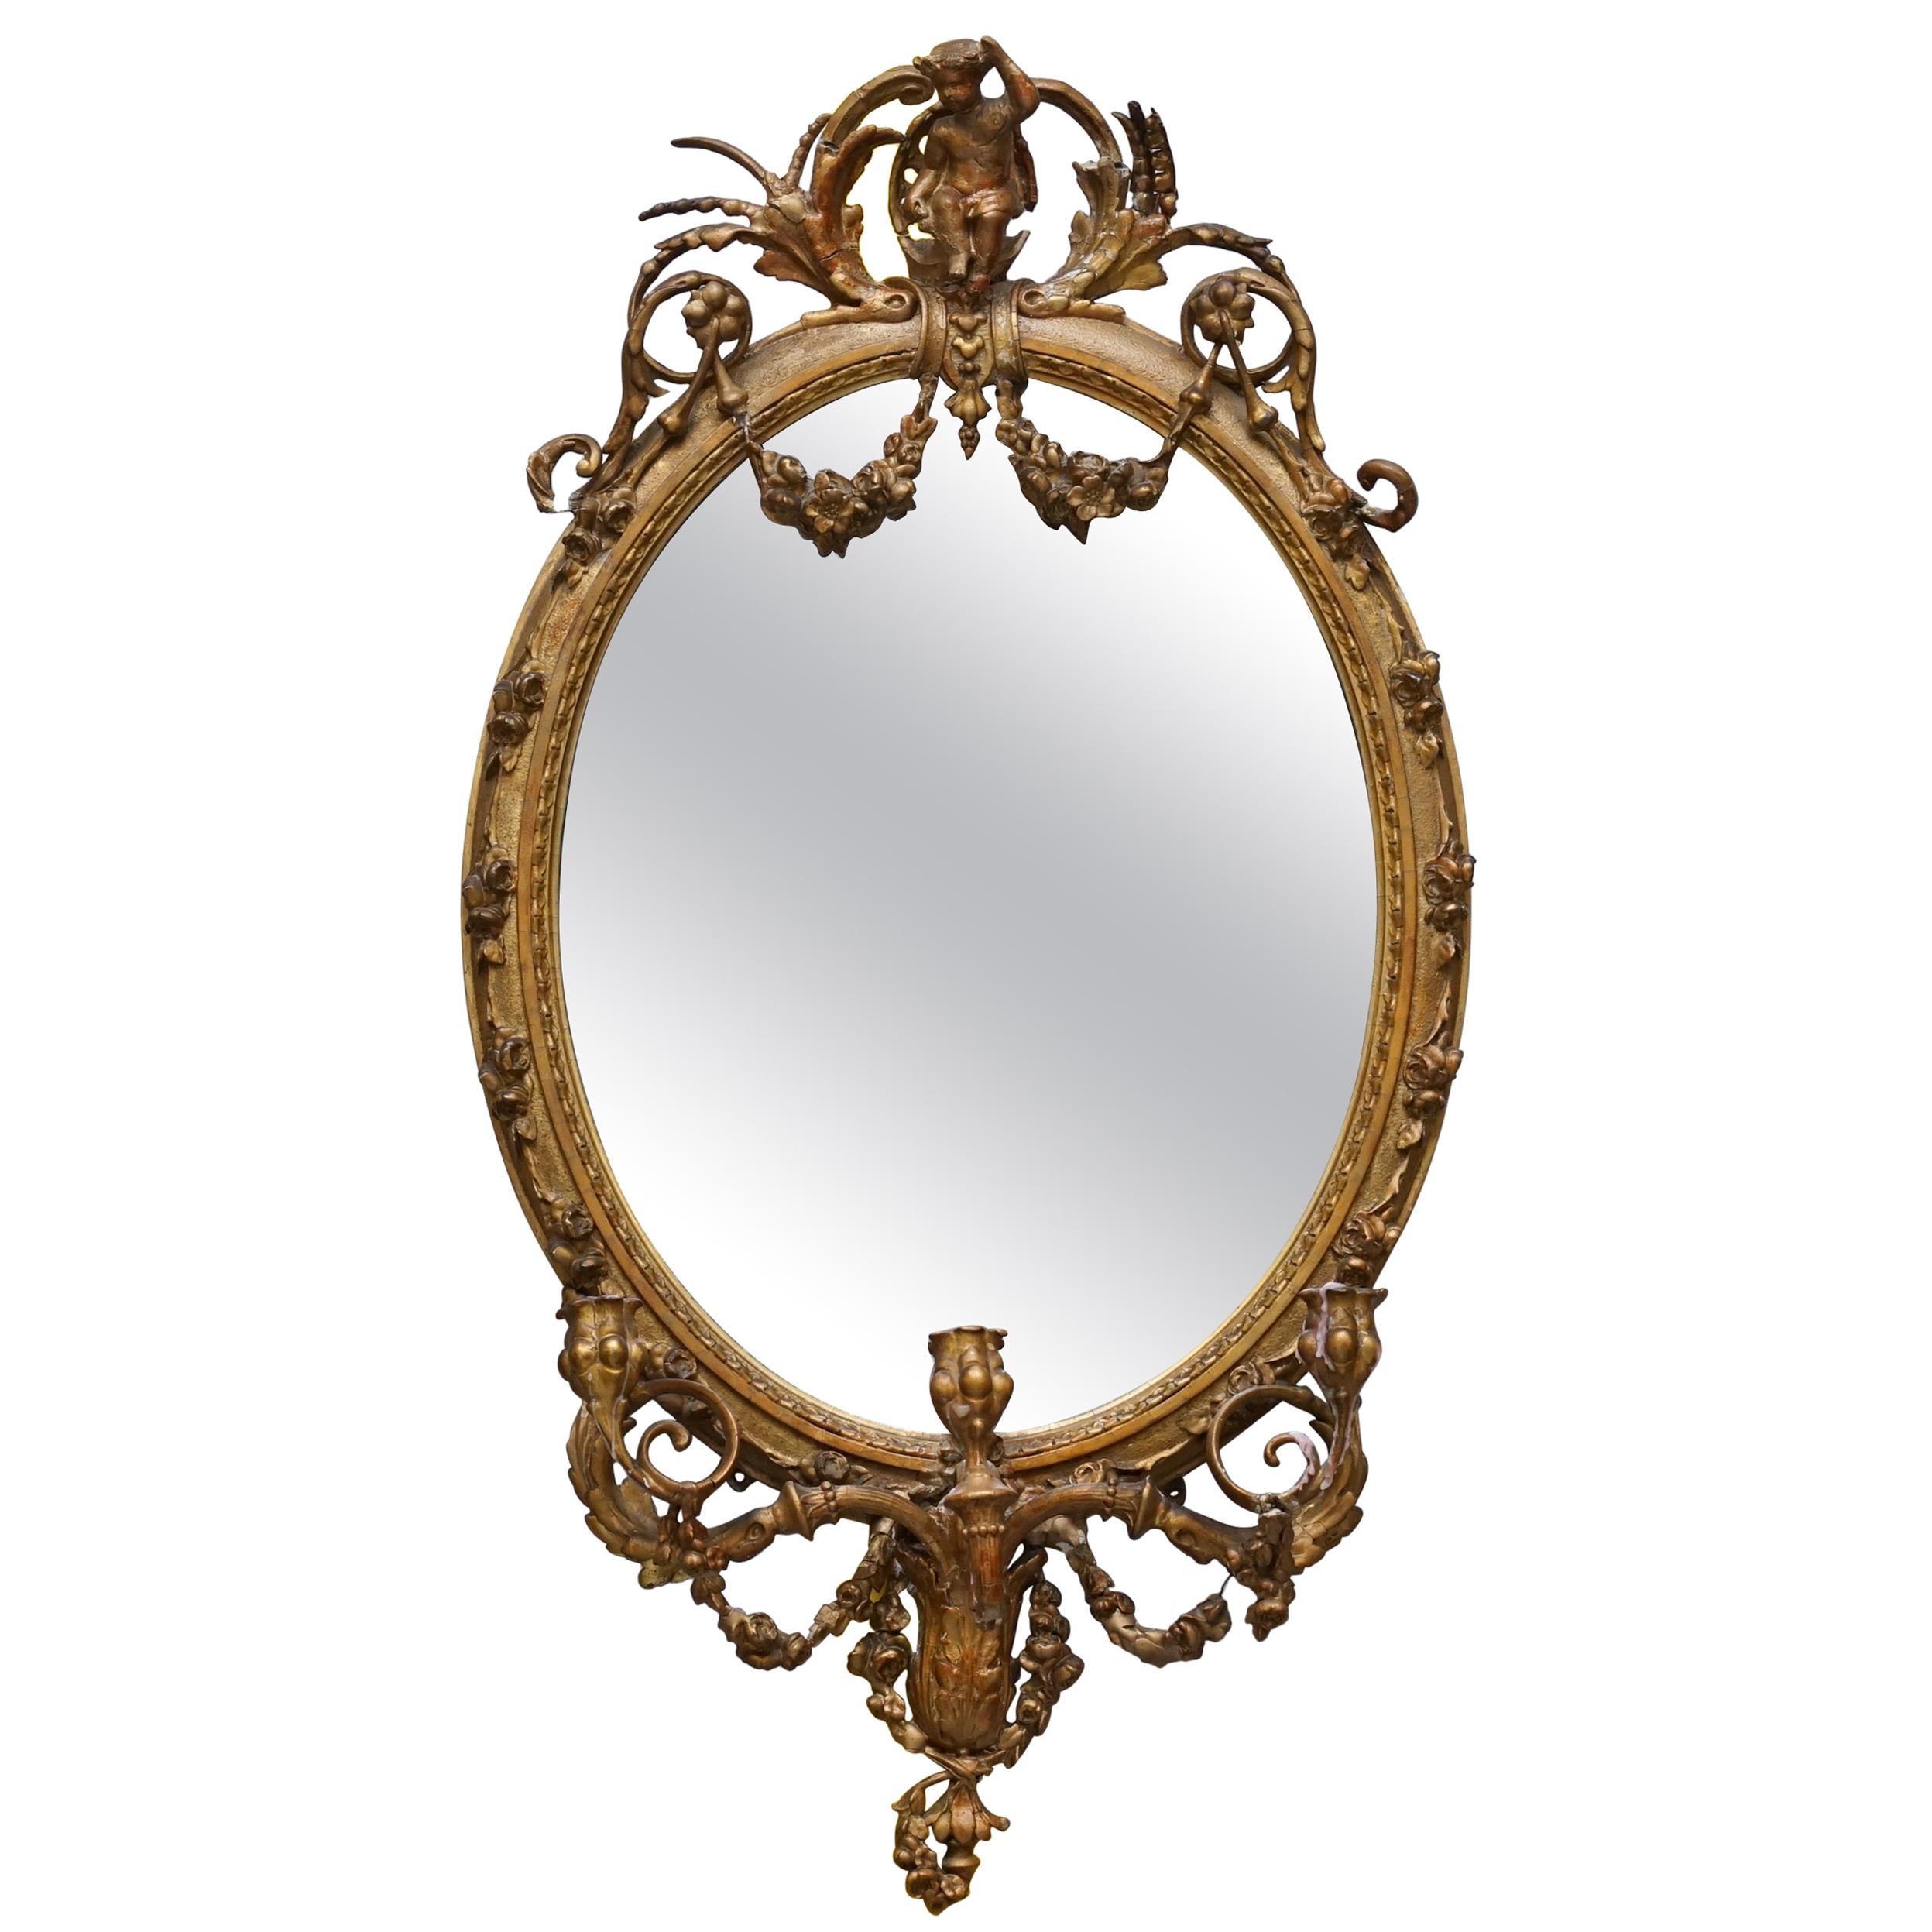 Original circa 1800 Gold Gilt Frame Girandole Mirror Carved Cherub Putti Angel